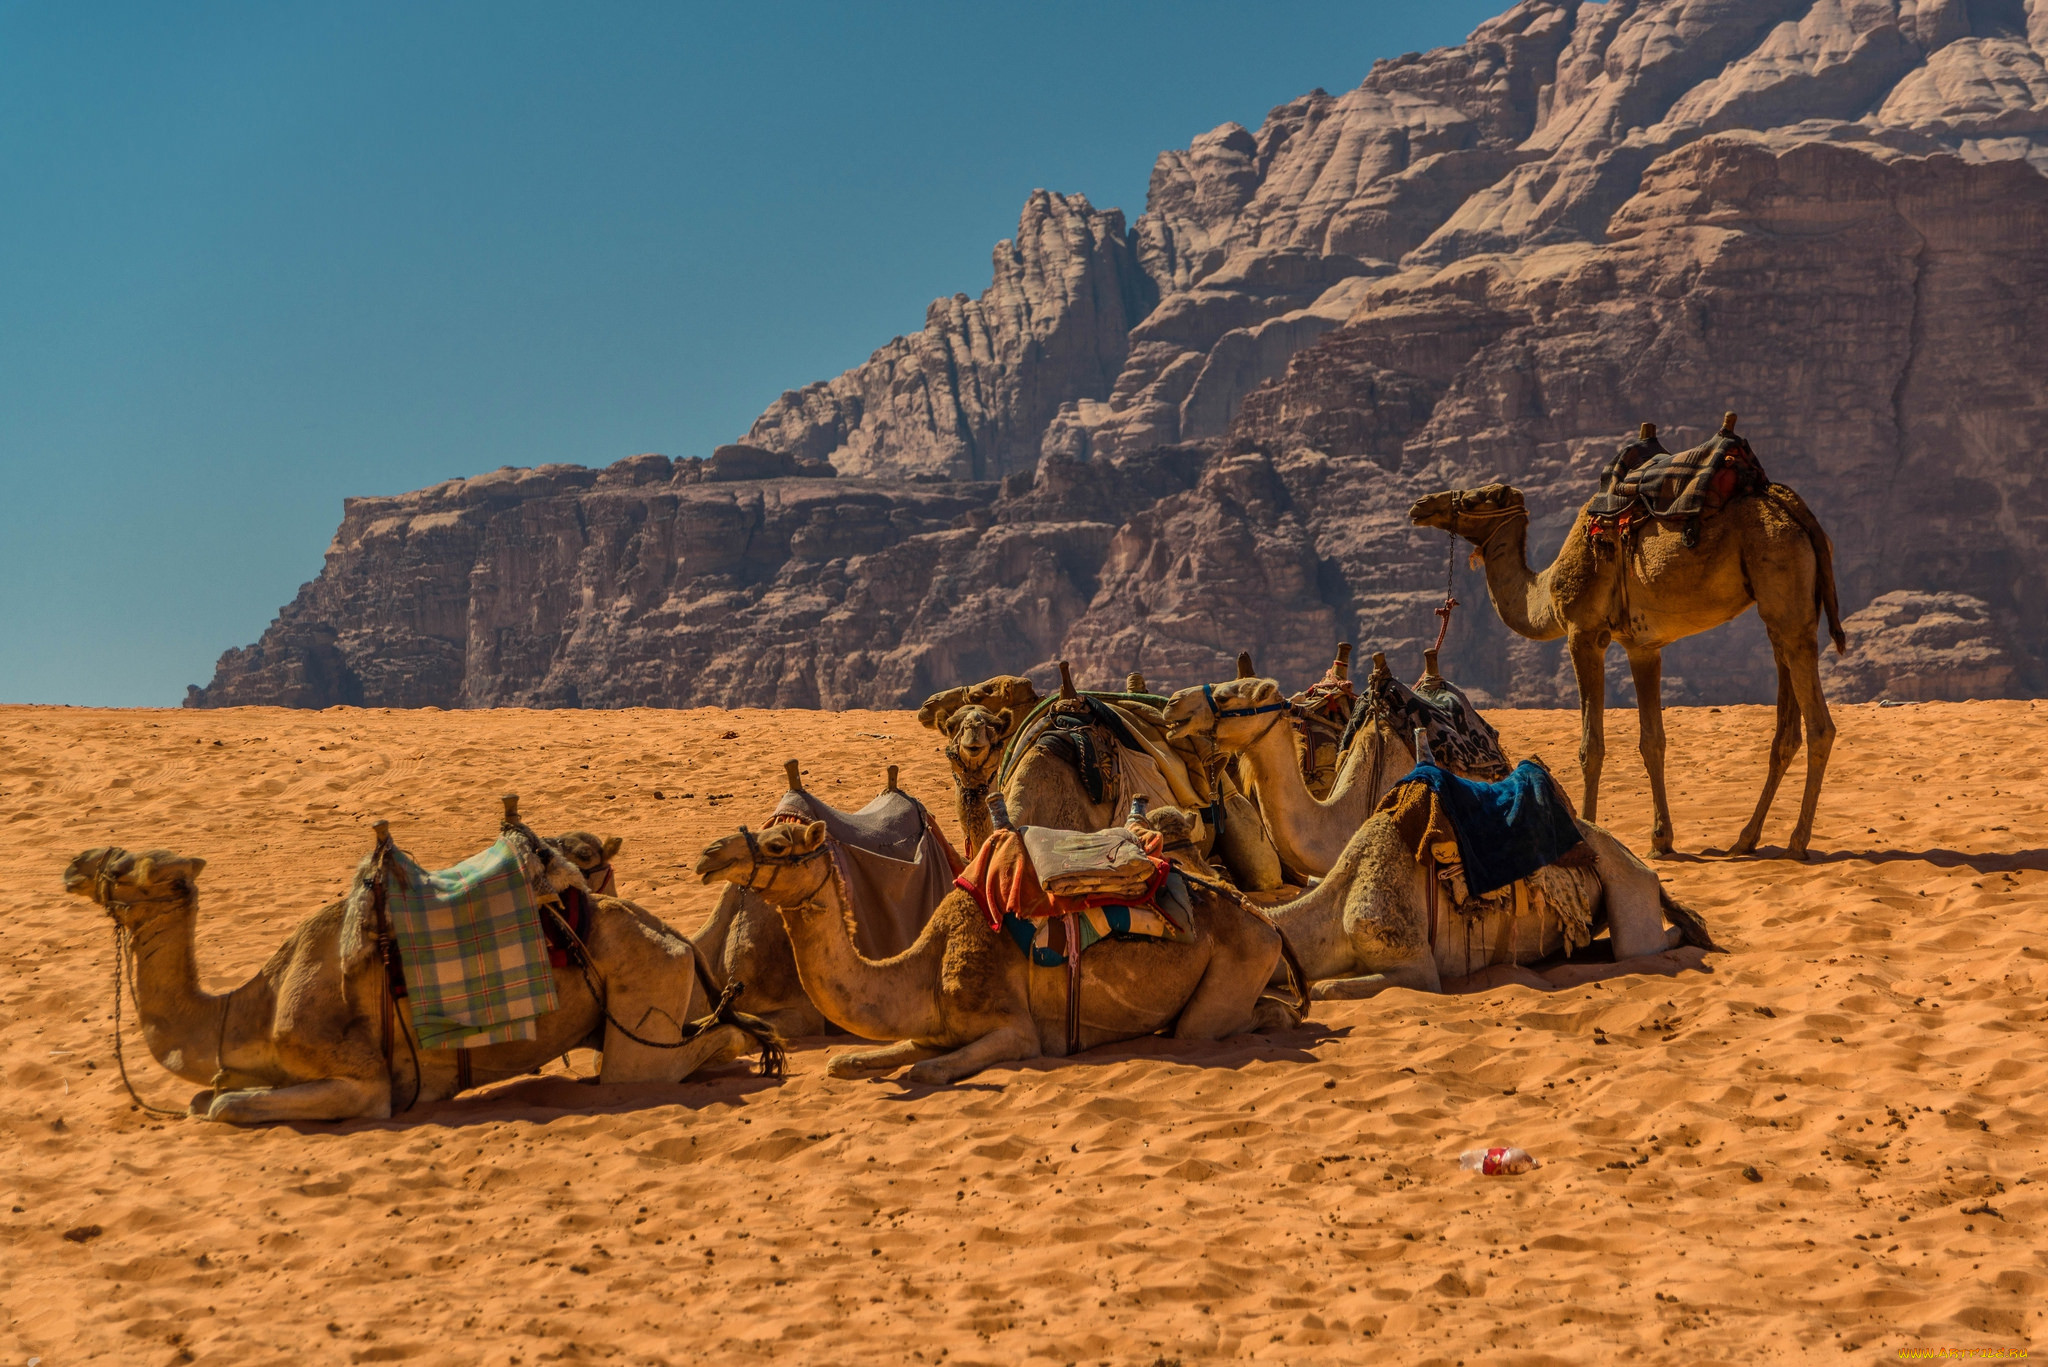 Караван картинка. Верблюд Караван пустыни. Мехари верблюд. Караван с верблюдами в пустыне. Караван верблюдов в пустыне.